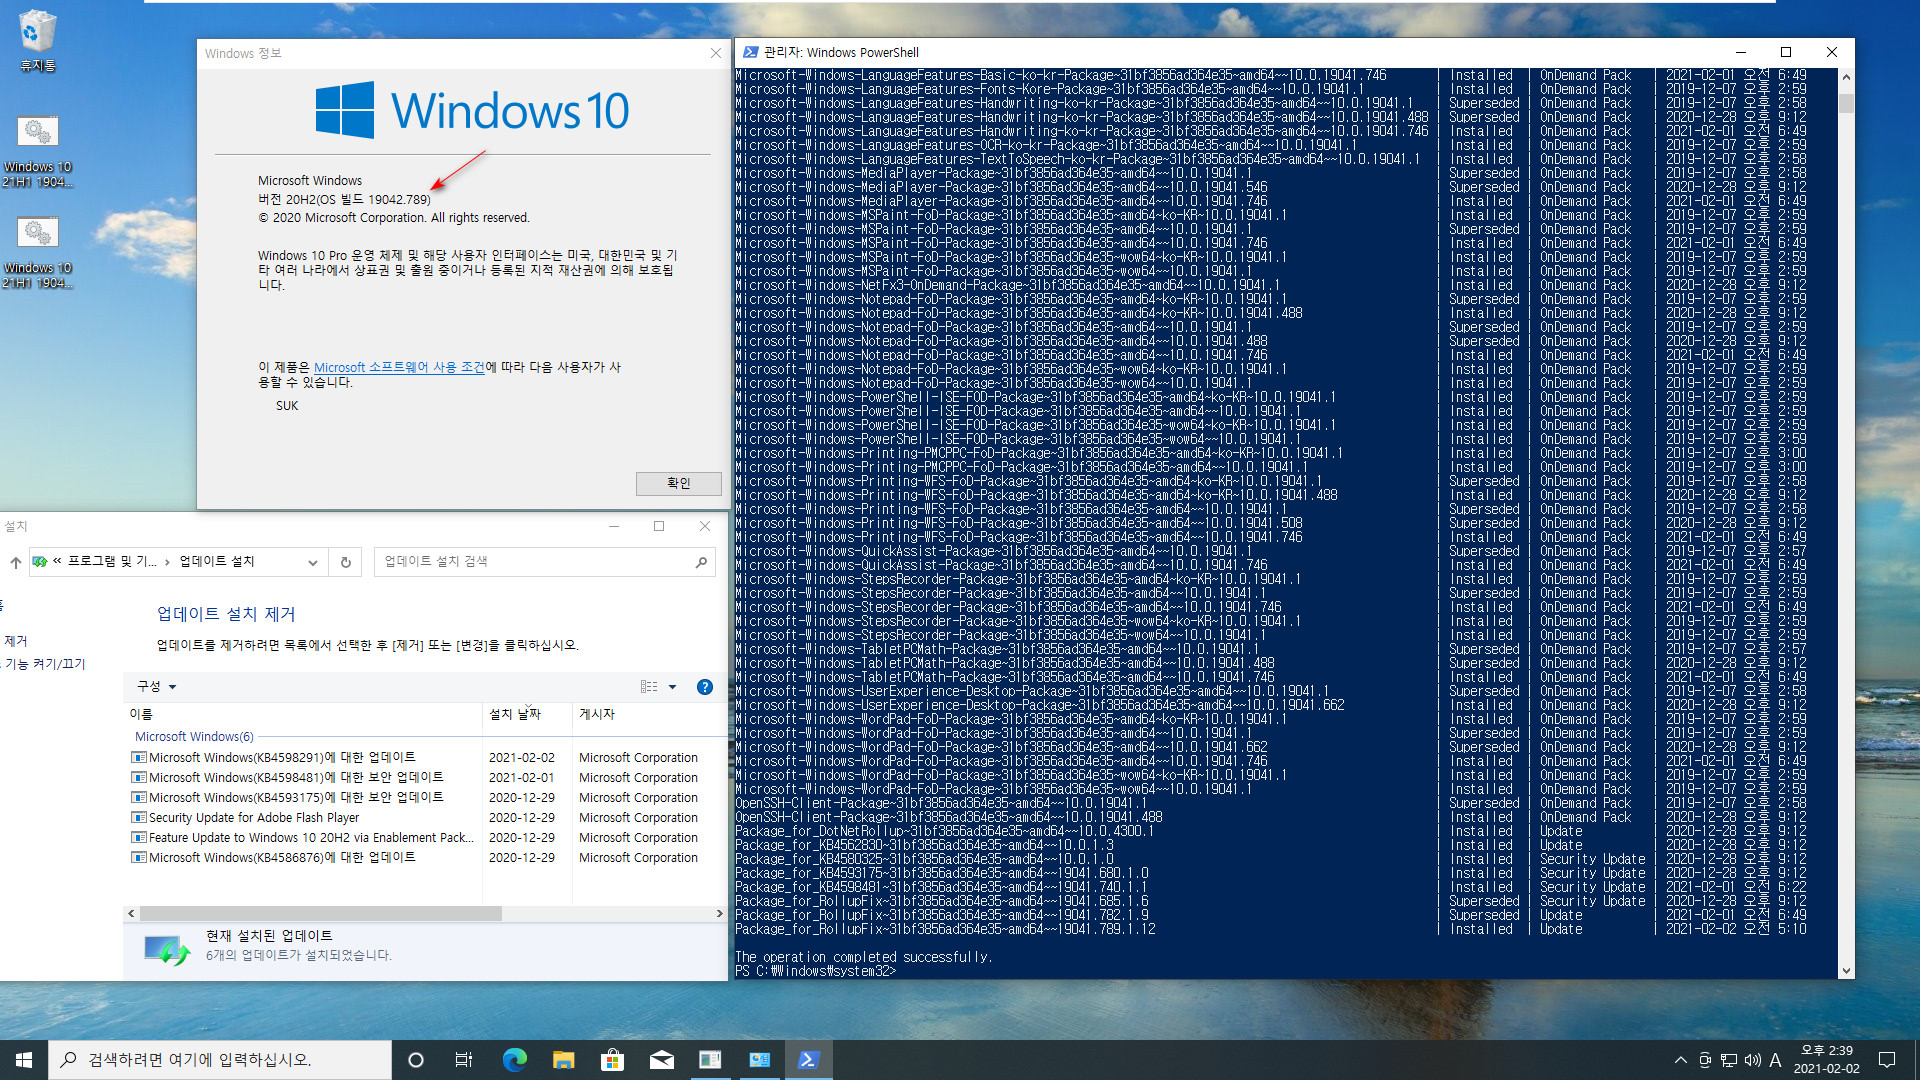 Windows 10 21H1 19043 빌드로 업그레이드하기2.bat 테스트 - 21H1 업그레이드 후에 새 누적 업데이트 설치하려면, 21H1 제거한 후에 새 누적 업데이트 설치해야 하네요 2021-02-02_143935.jpg